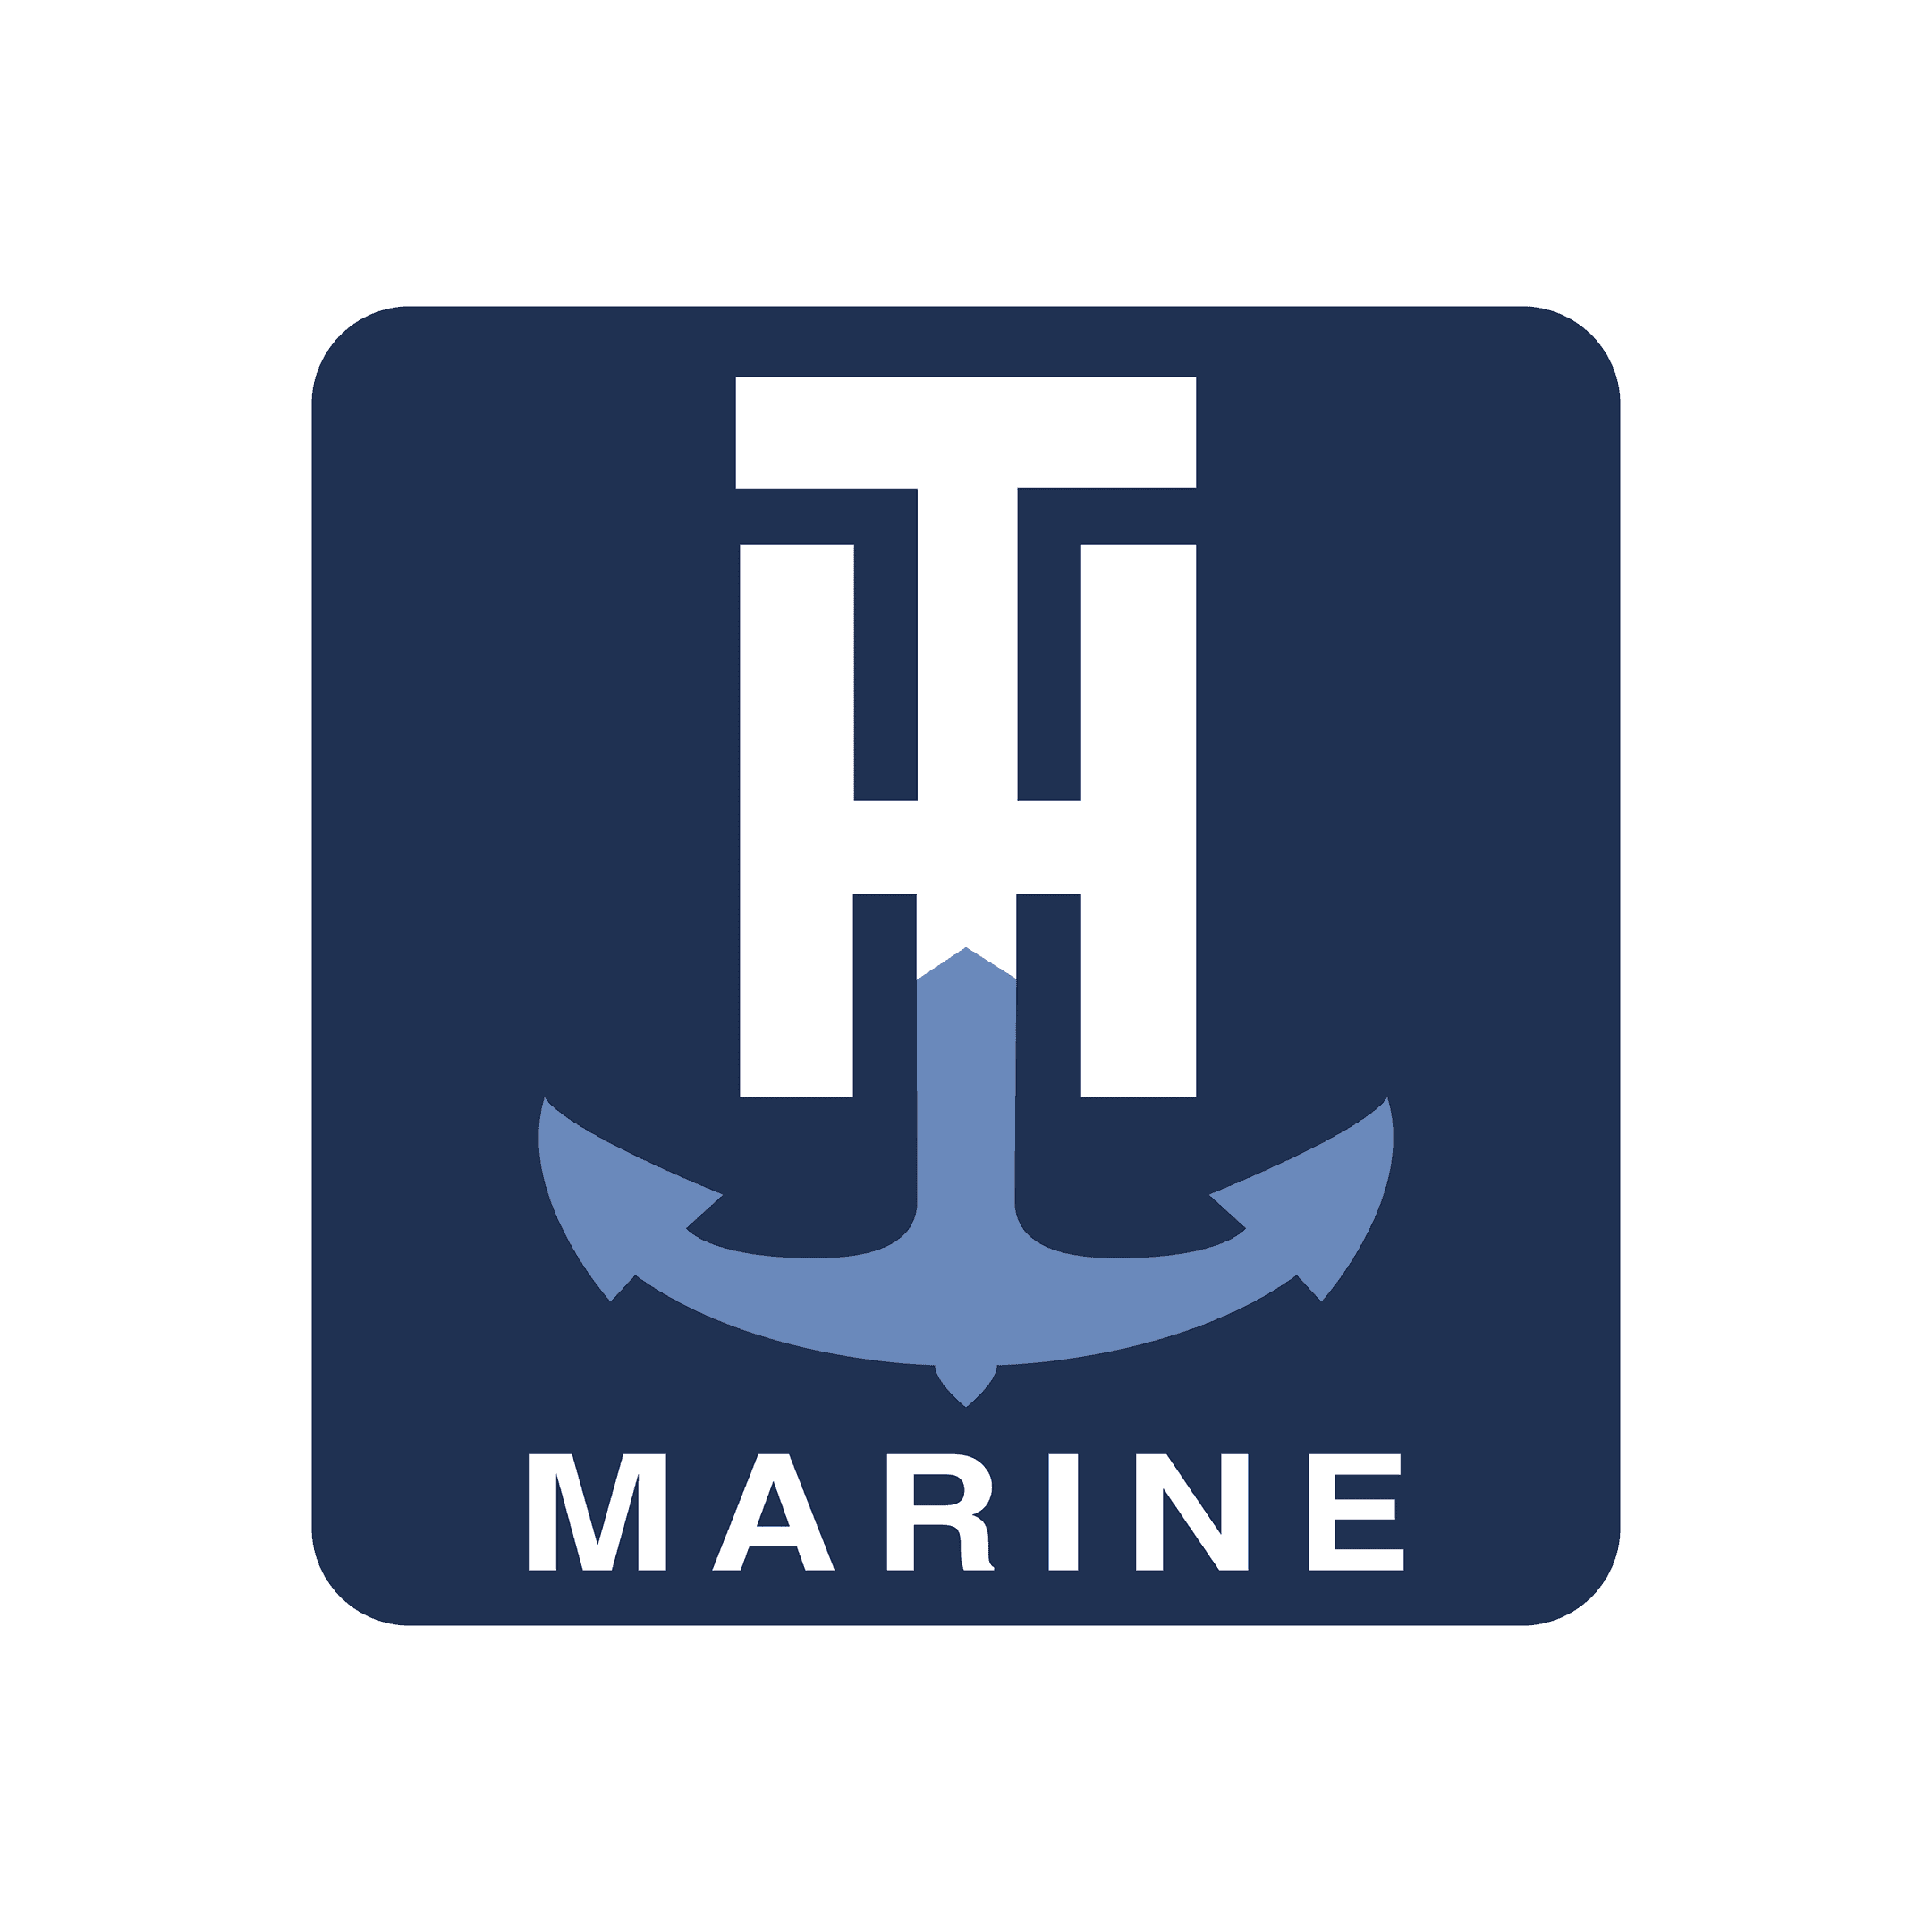 Th Marine